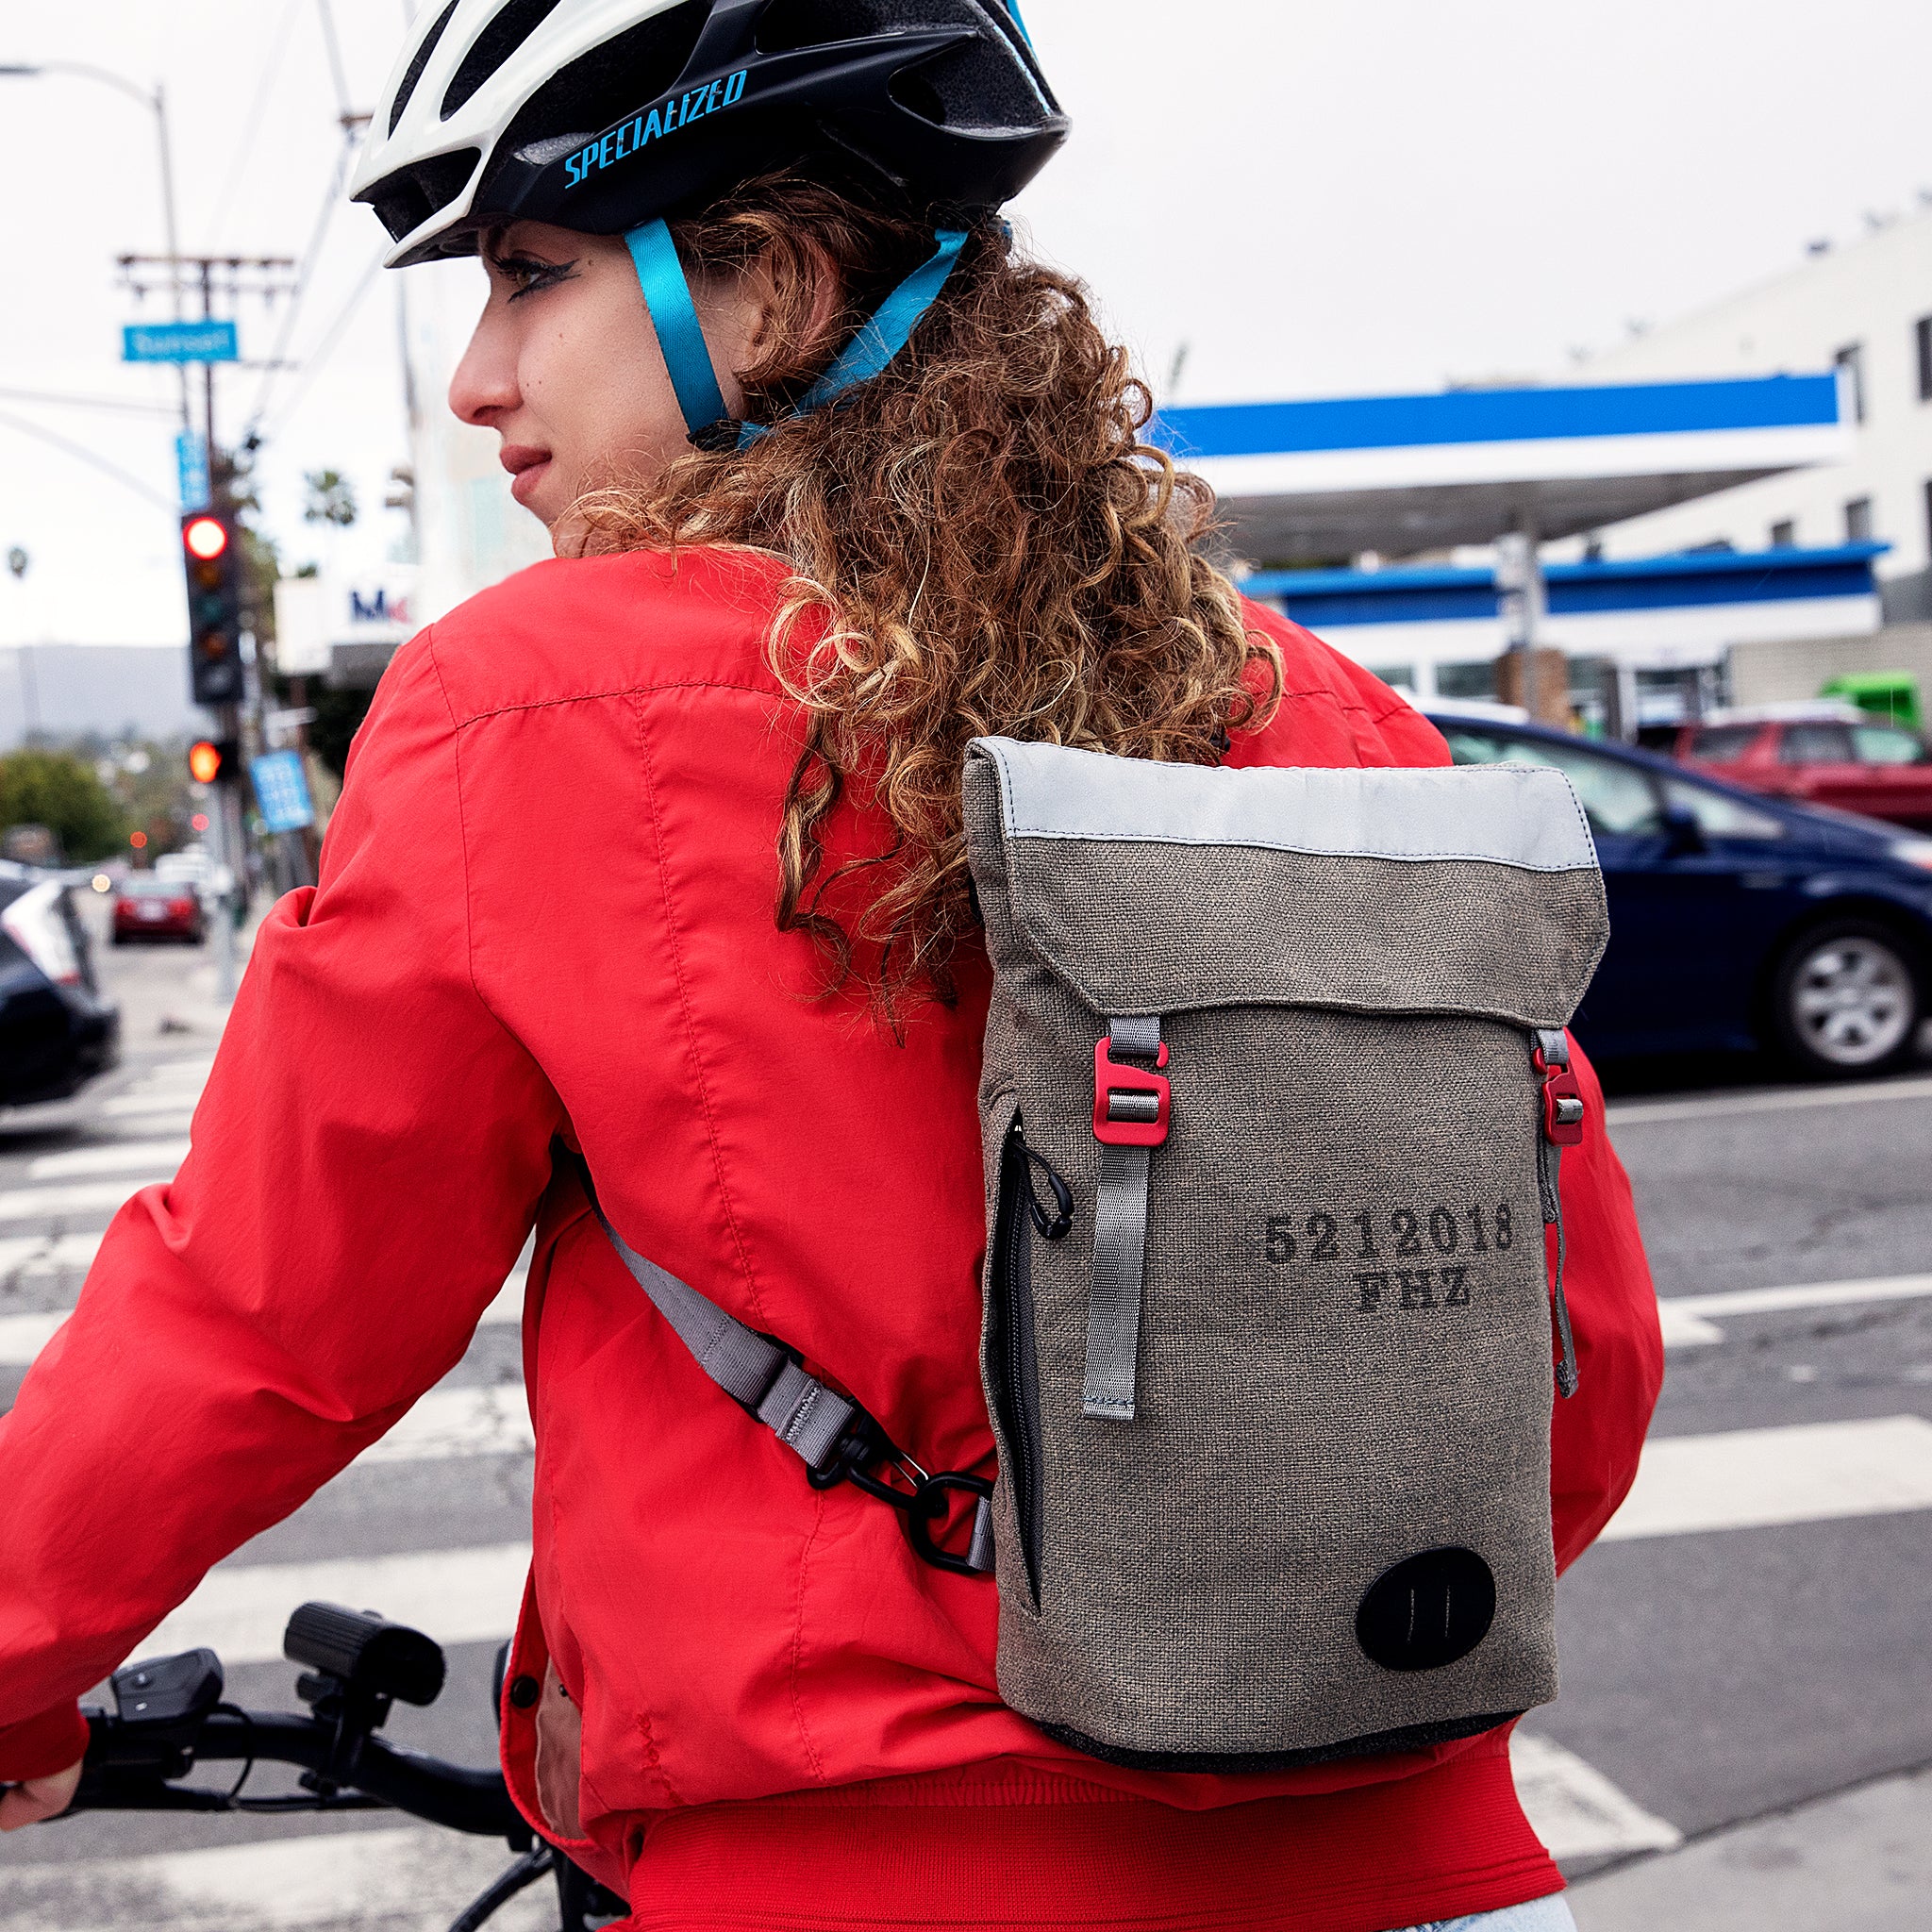 Buy ULTRALITE -New Goods Delivery Biker Backpack- 100 Litre Capacity |  Logistic Bag Pack (Black) (Black) at Amazon.in